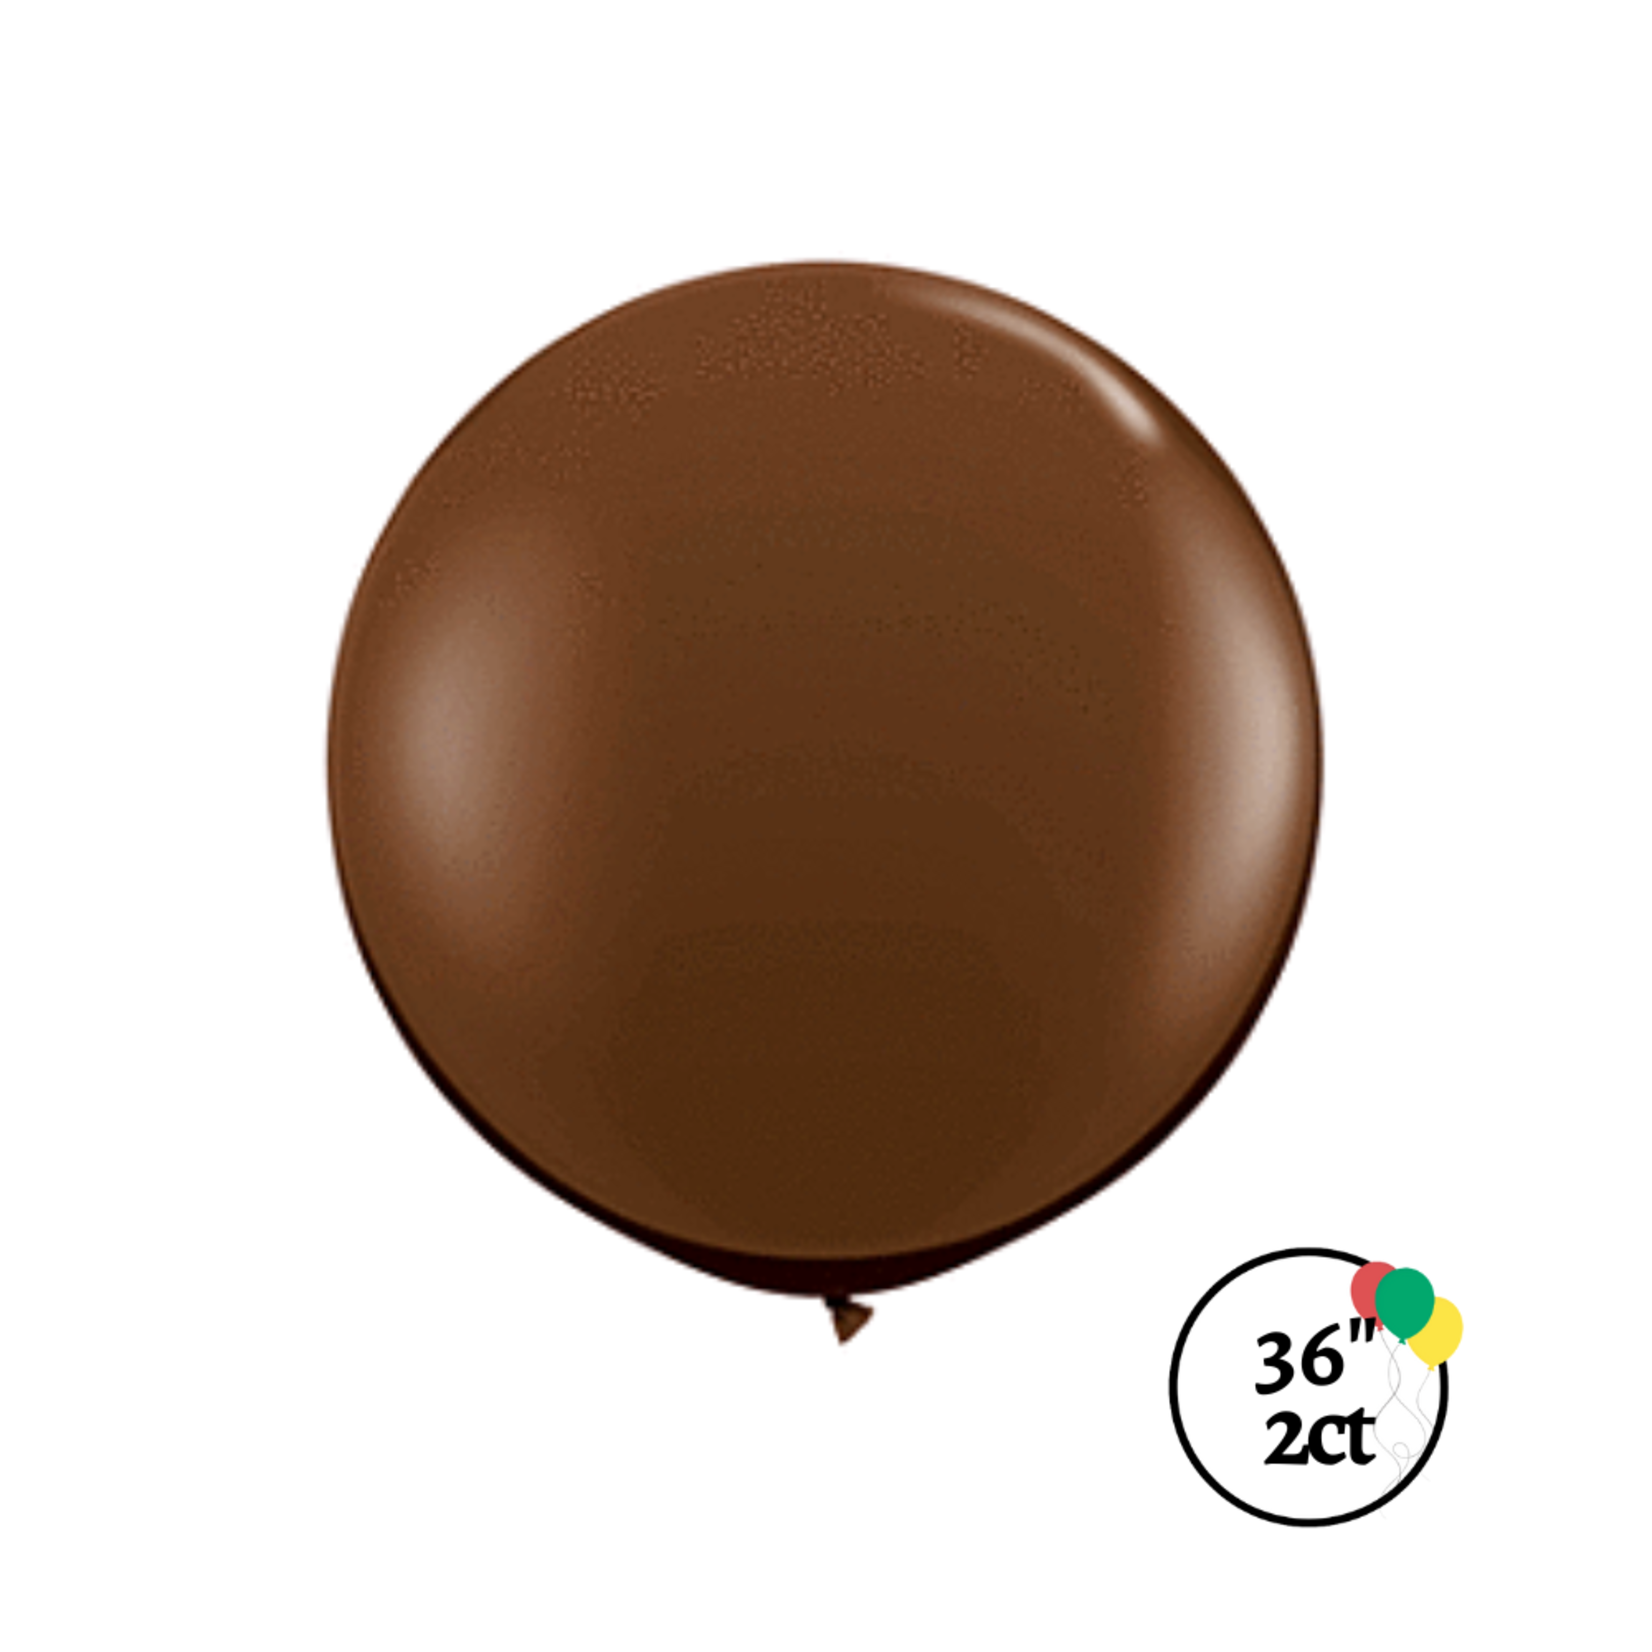 Qualatex Qualatex Chocolate Brown 3' 2ct